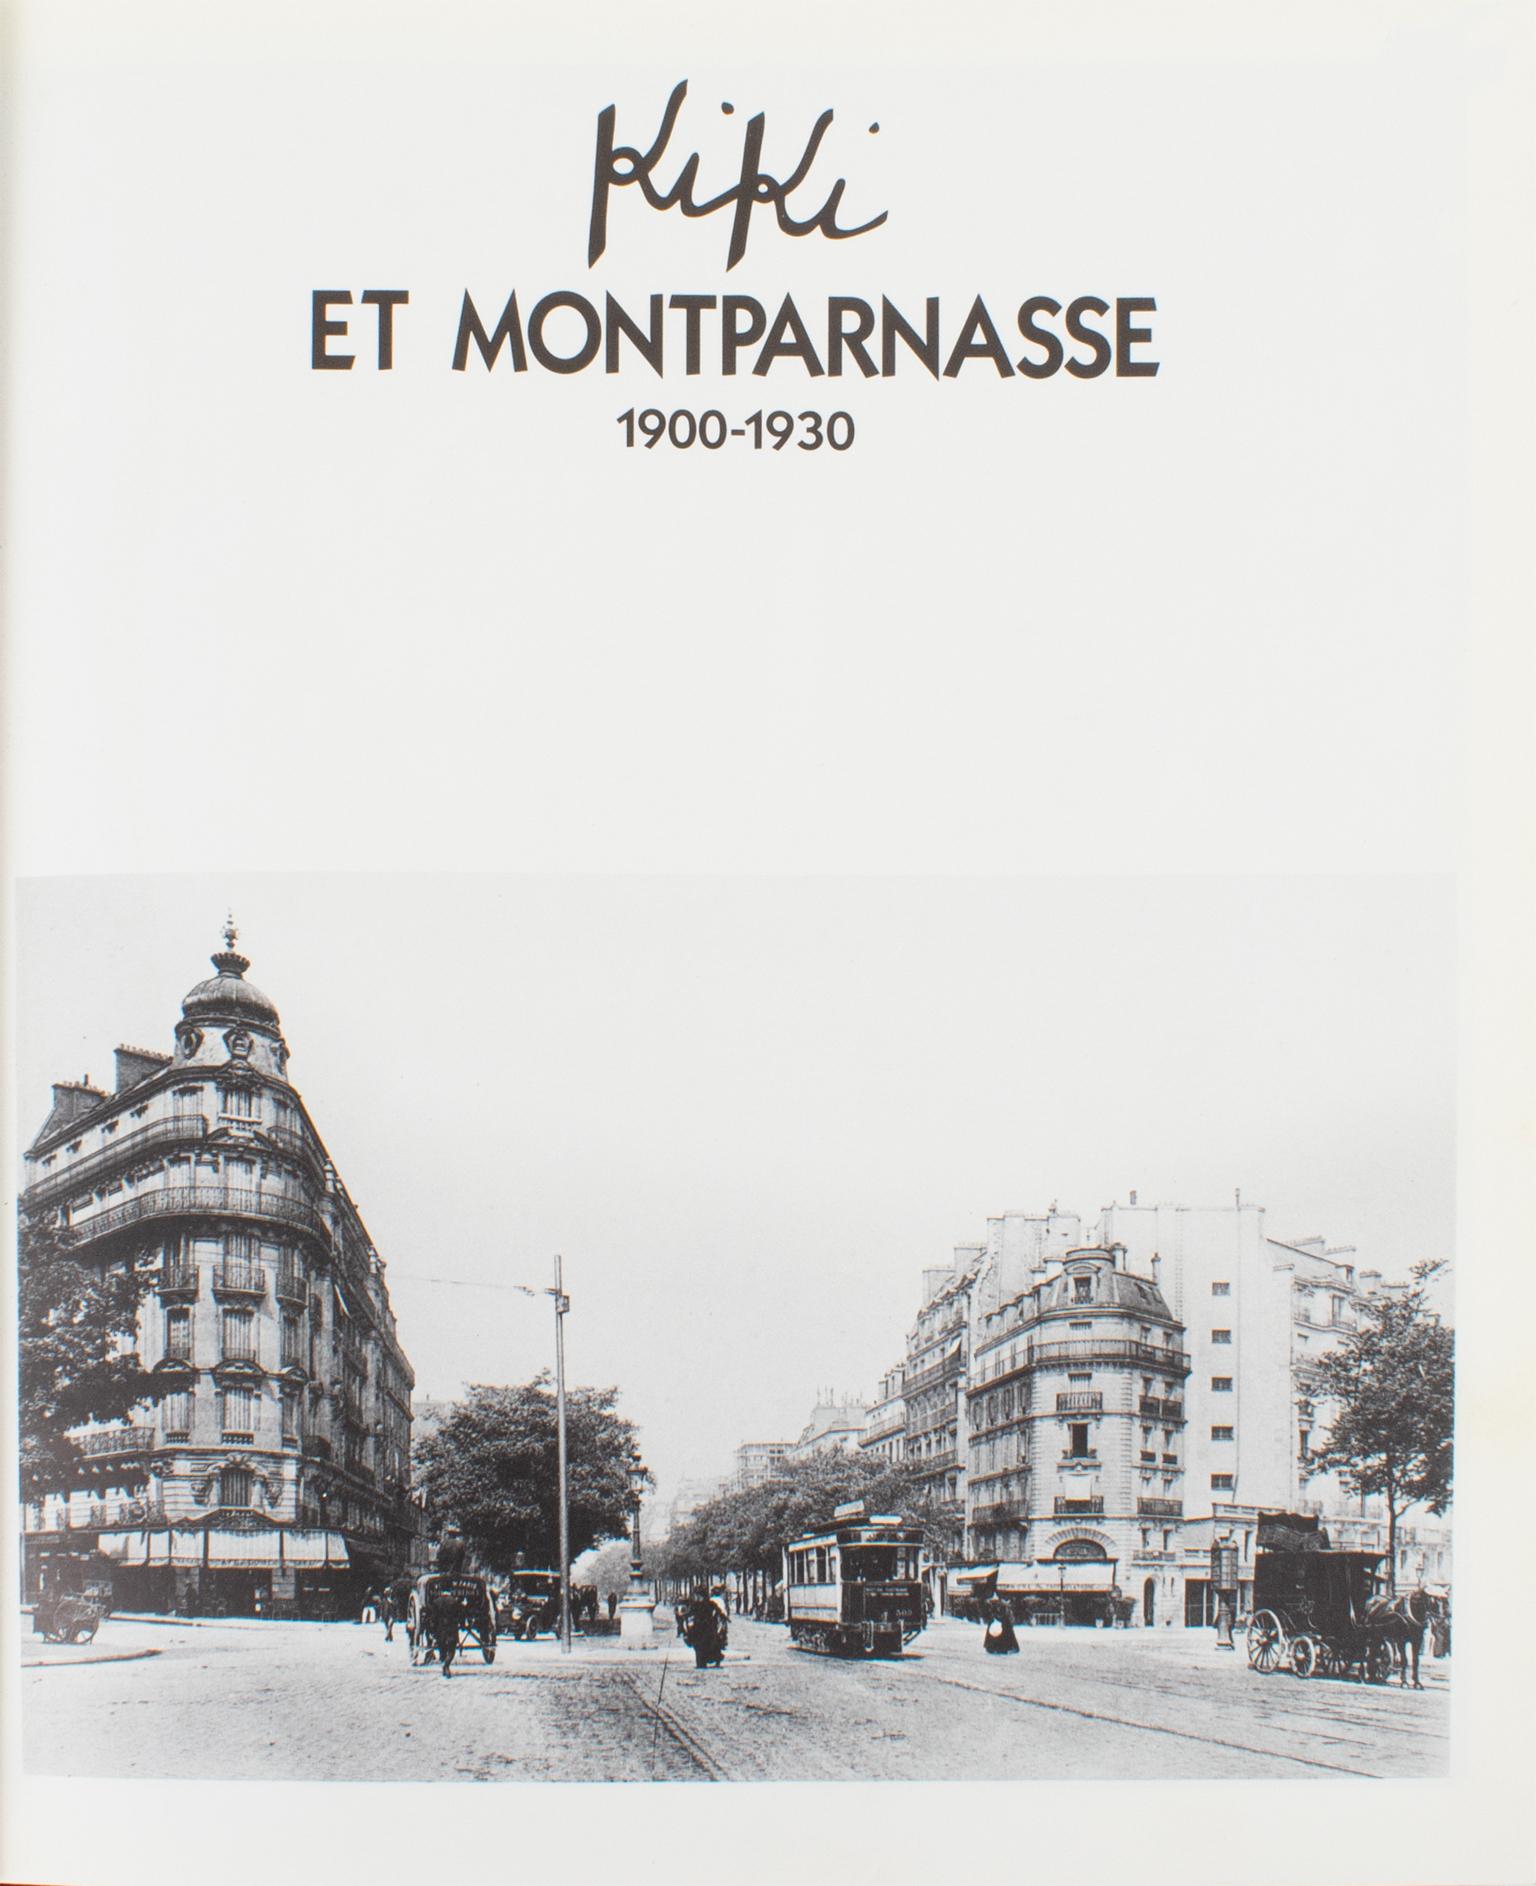 Kiki et Montparnasse 1900-1930, Livre français de Billy Kluver, 1989